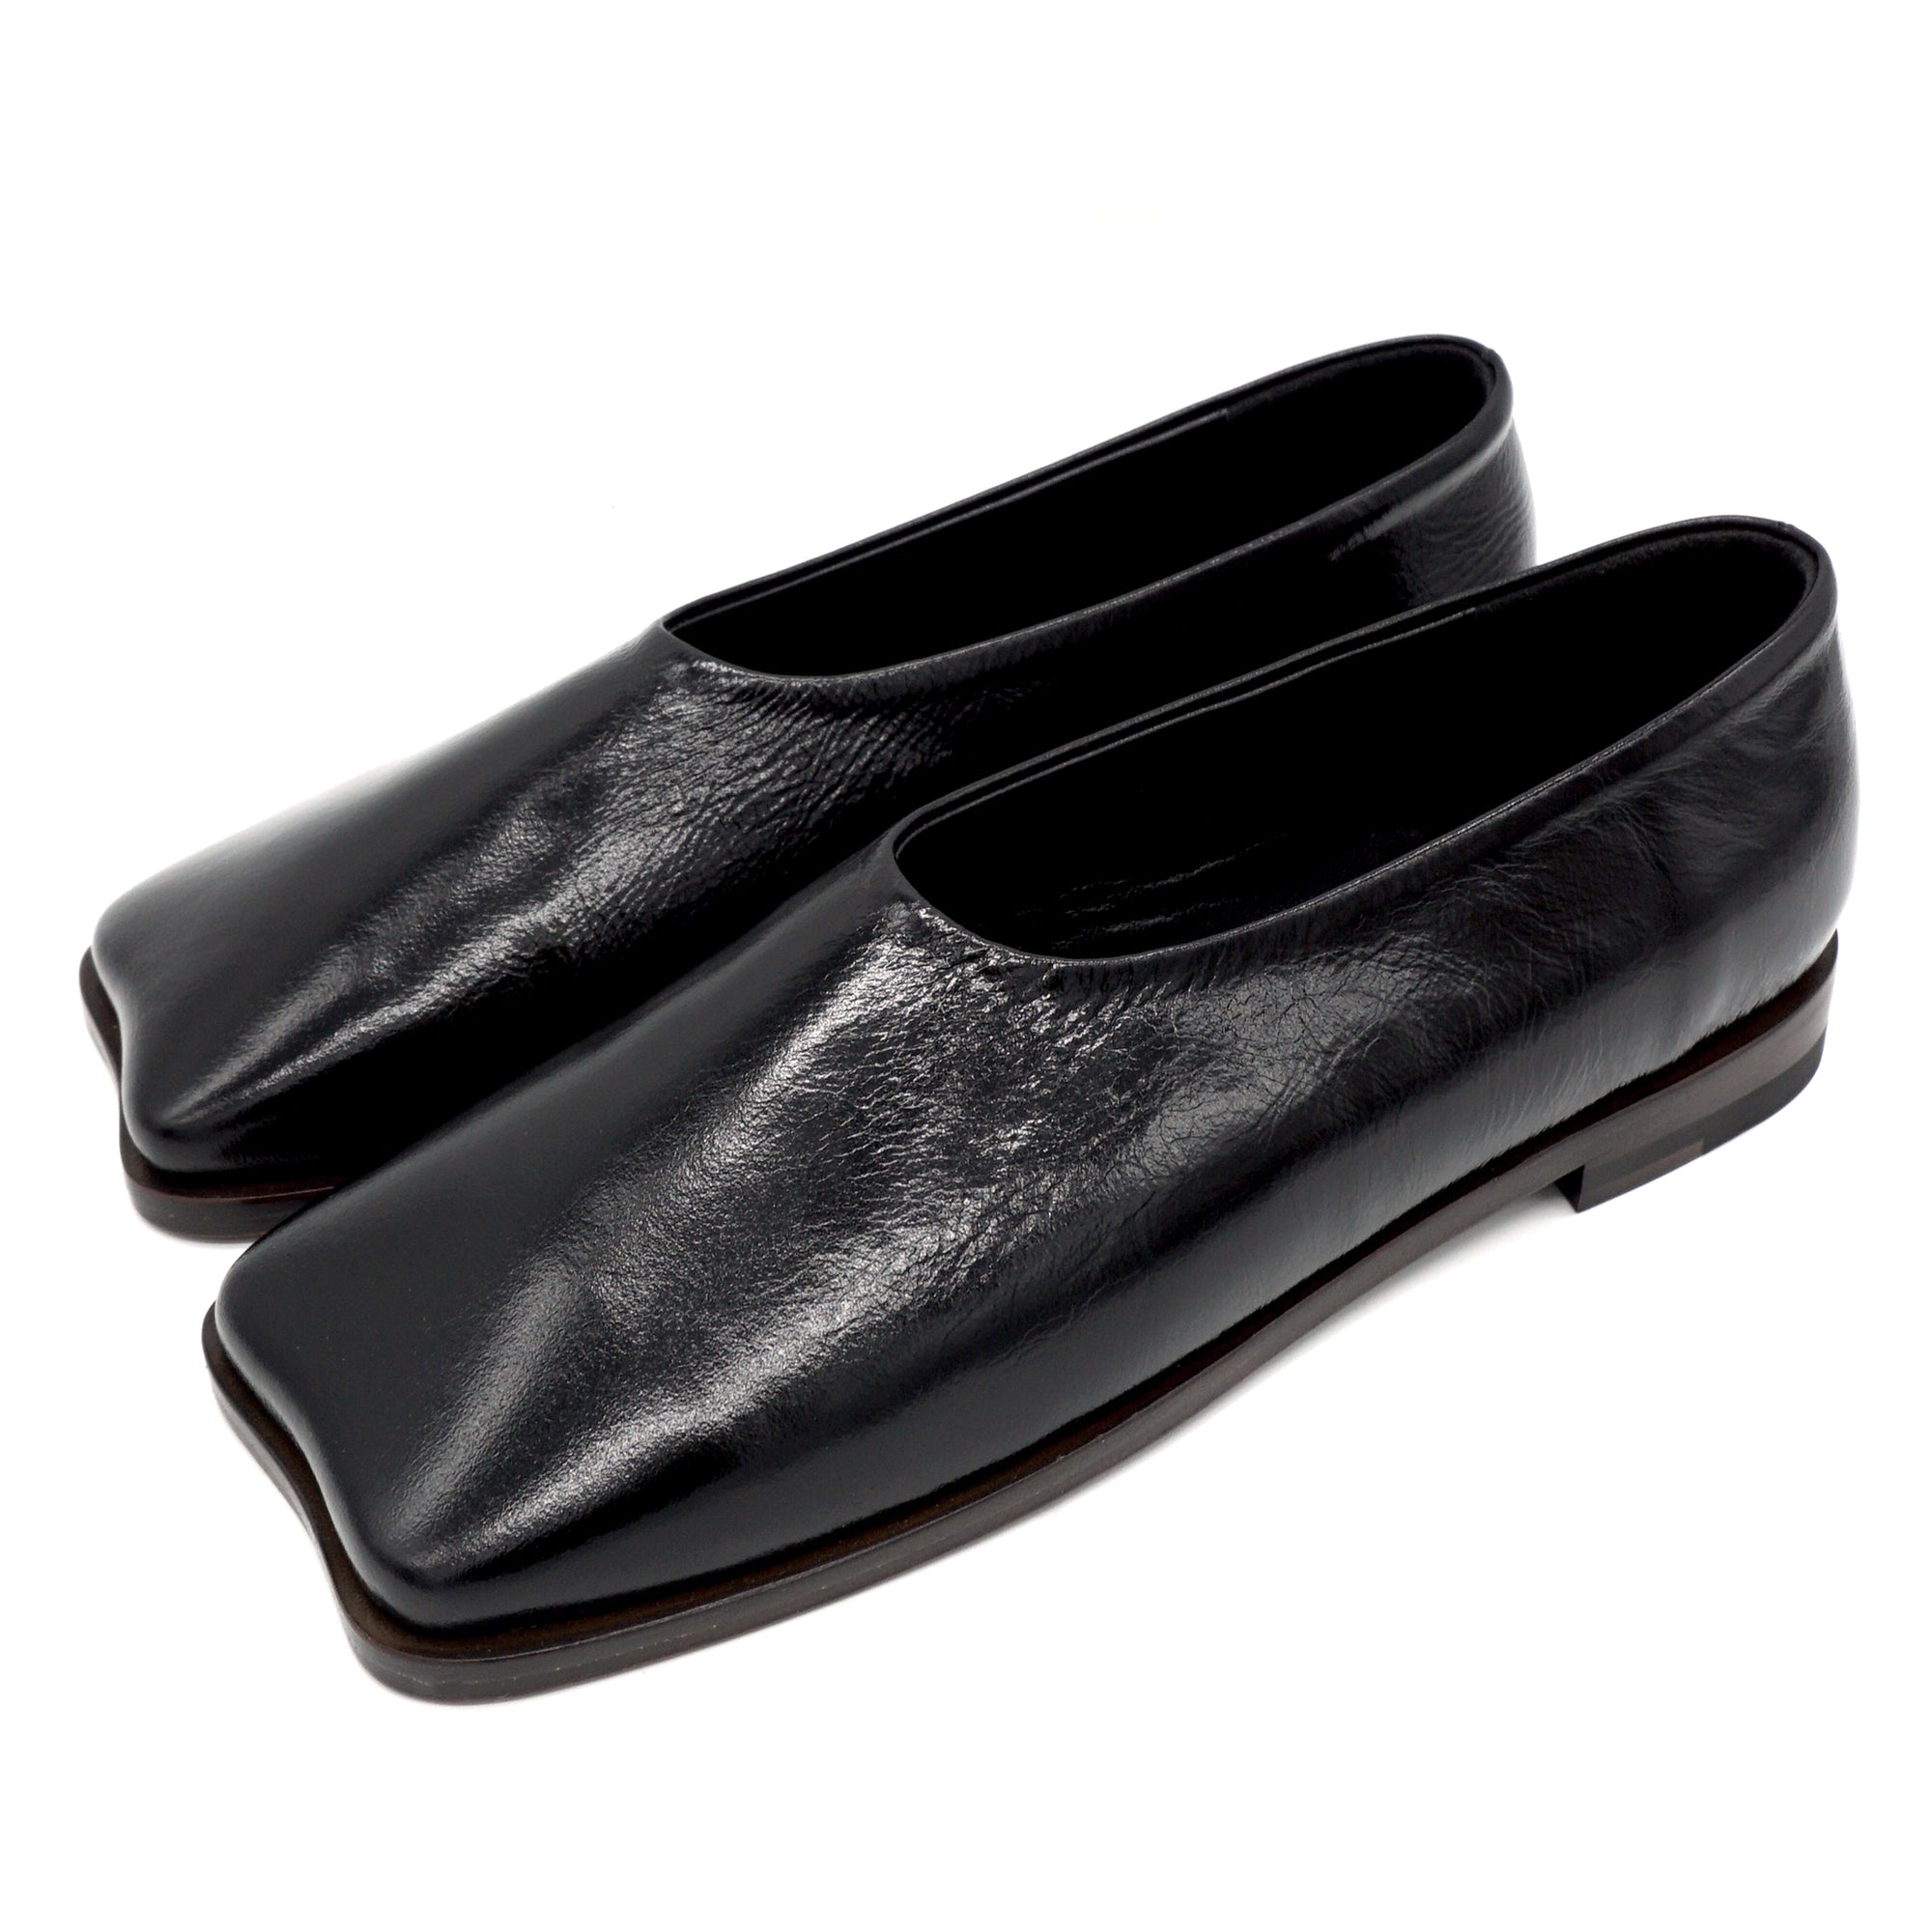 Aarahee - Women’s Crinkled Leather Flats - (Black) view 4